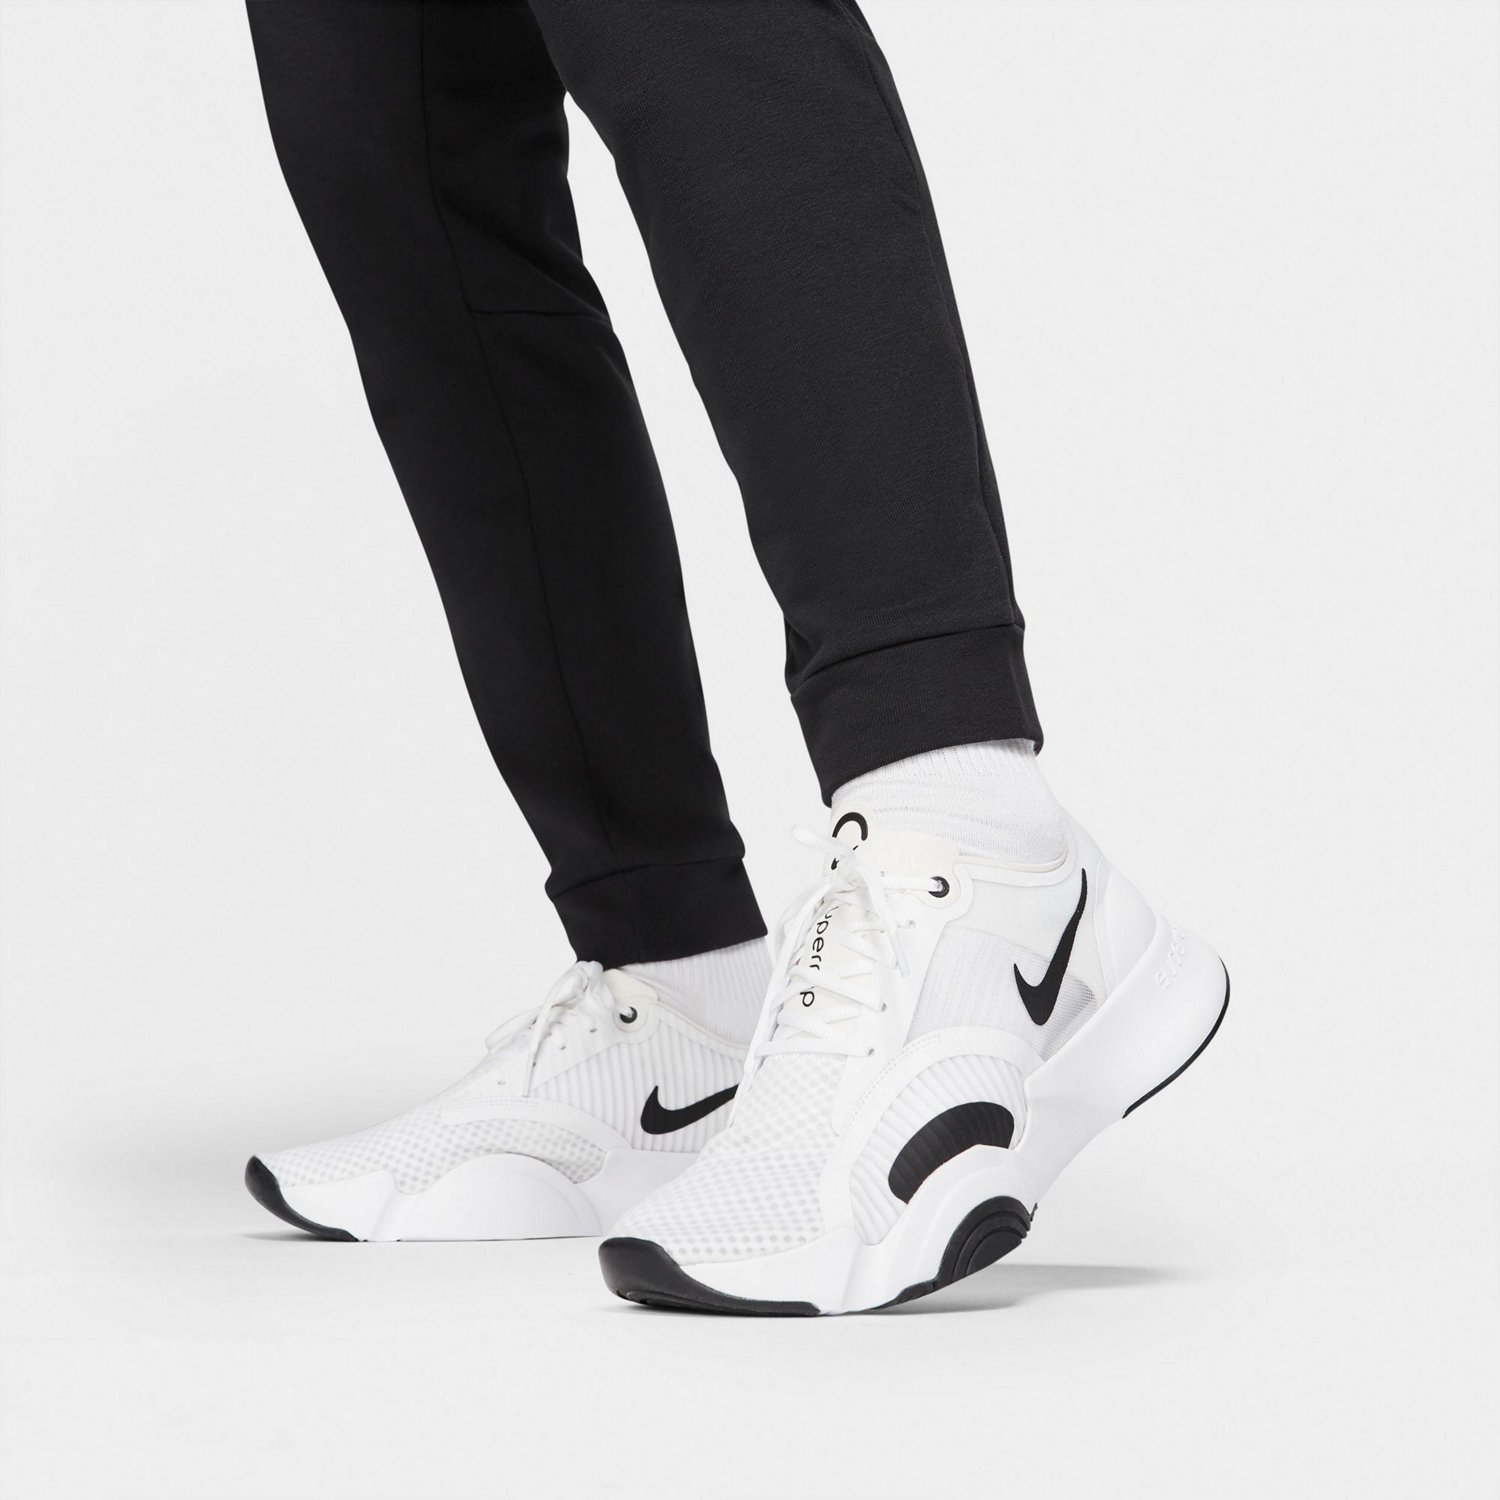 Nike Dri-FIT Tapered Training Pants - Tracksuit trousers Men's